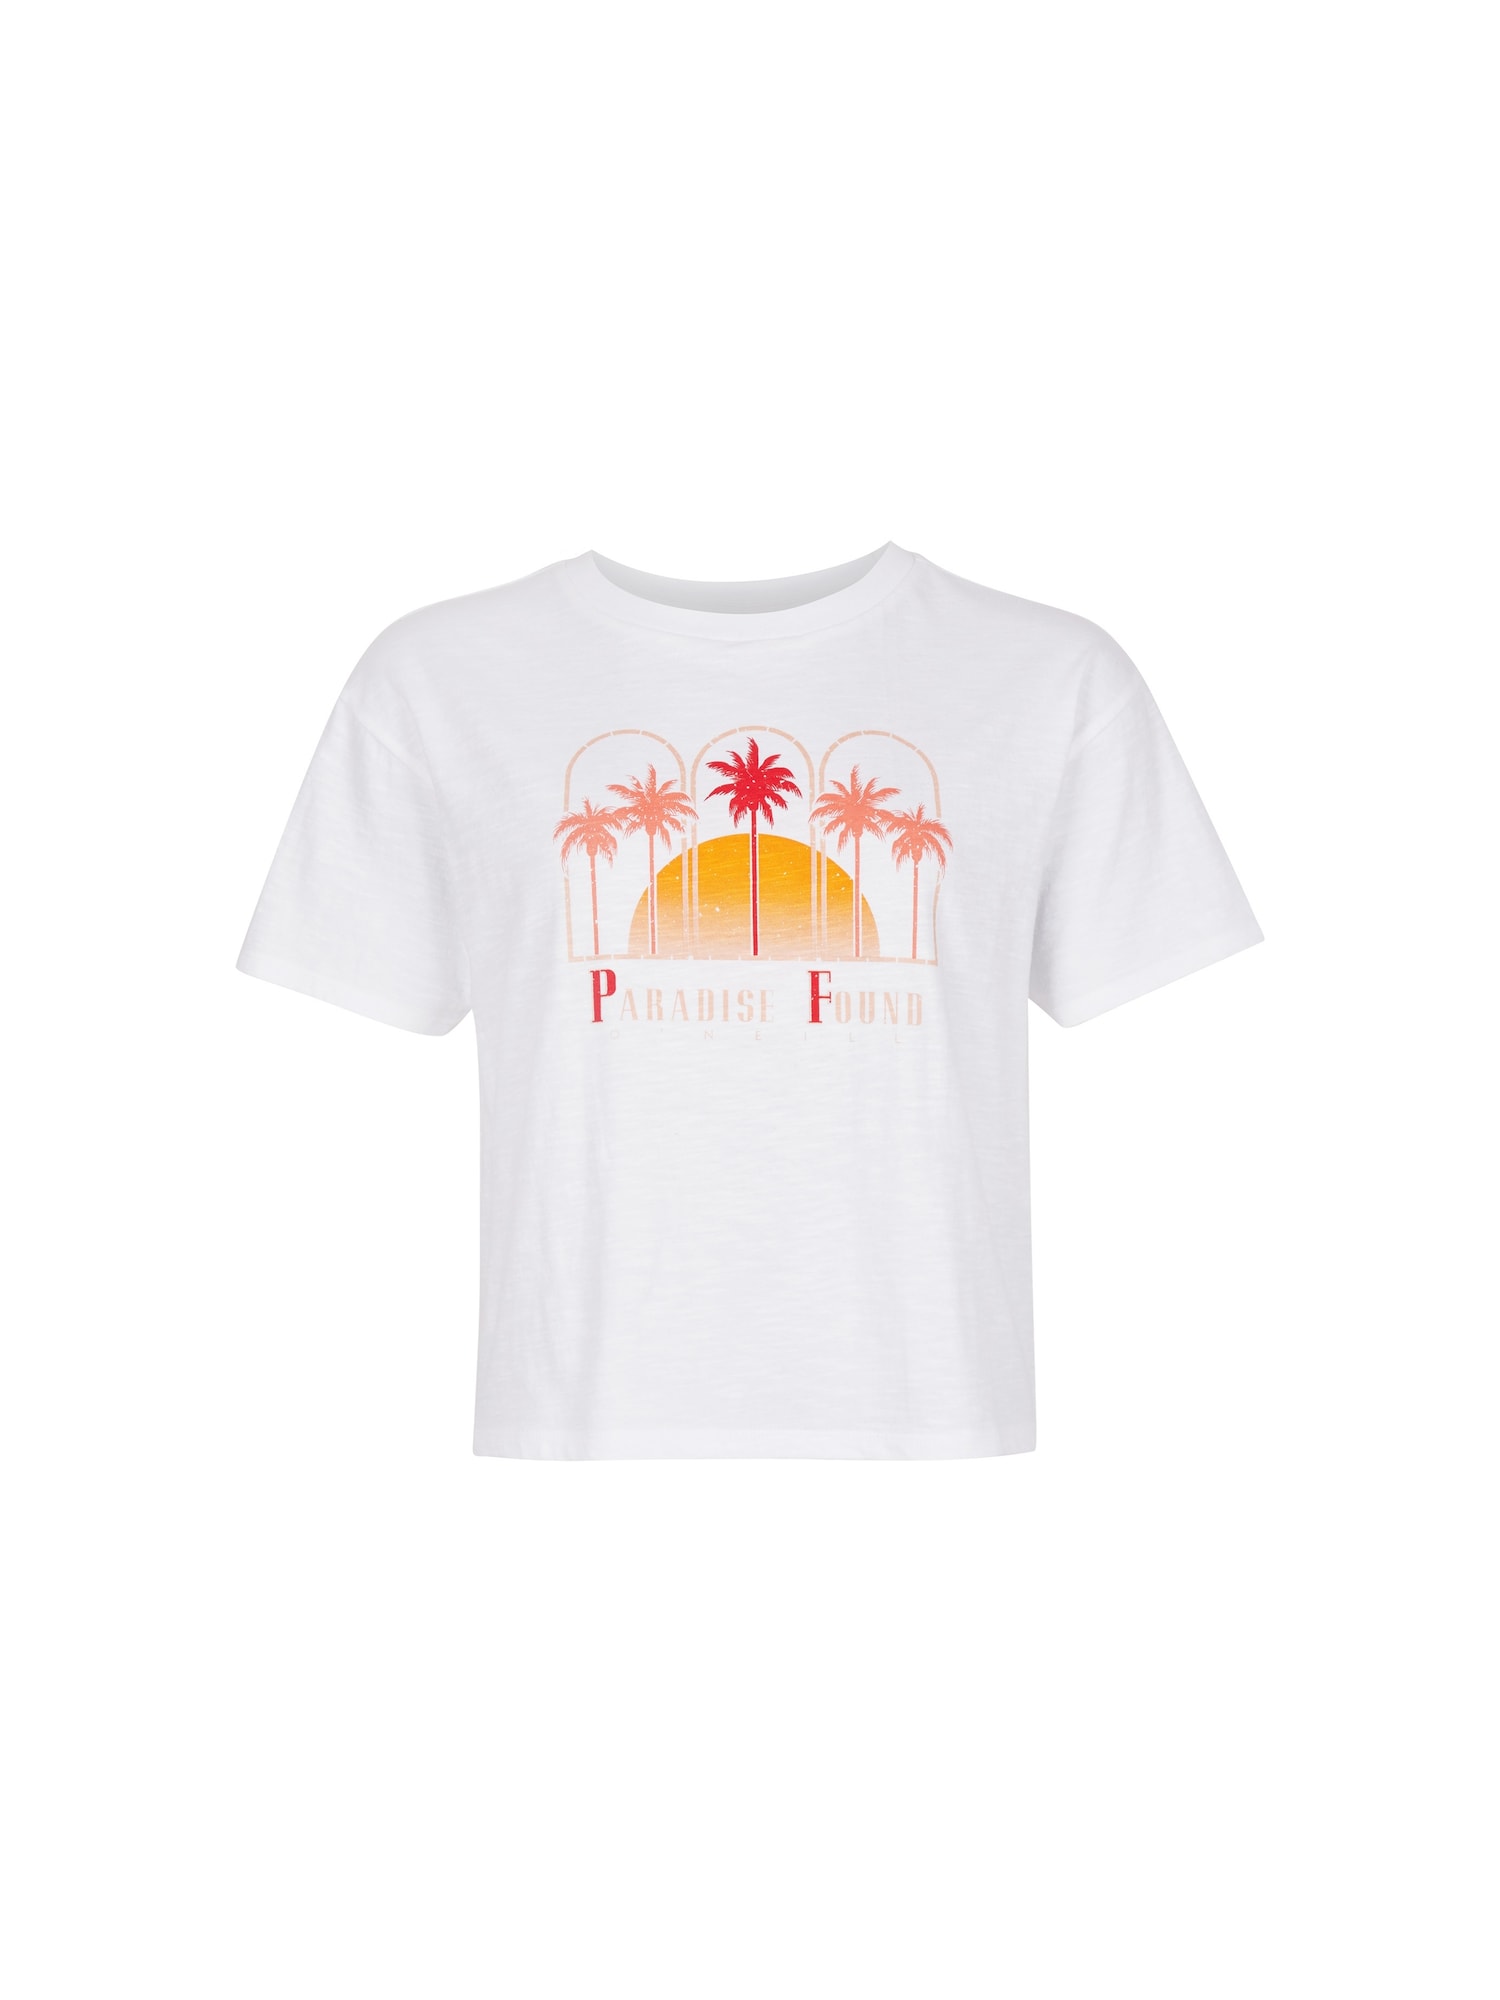 T-Shirt 'Paradise' von O'Neill